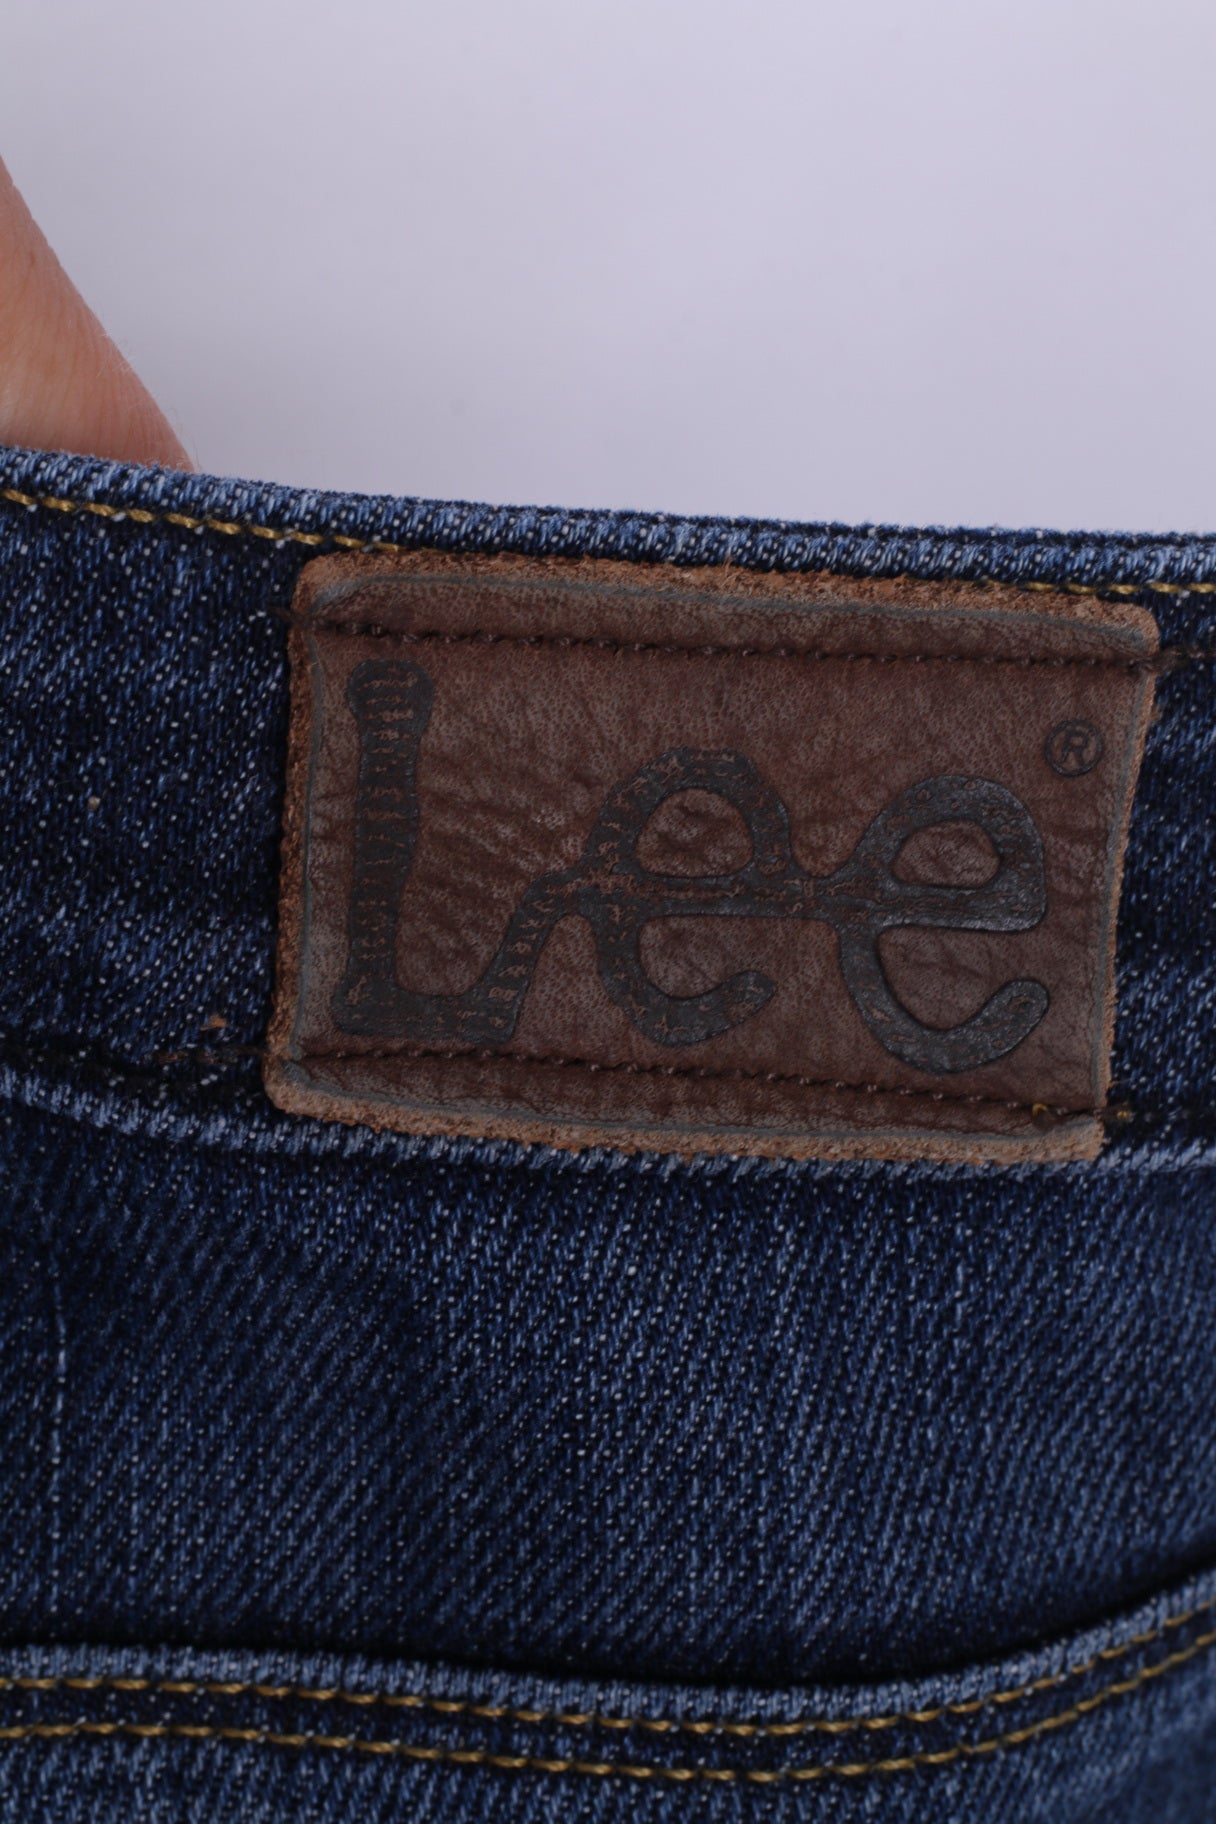 Pantaloni Lee Girls 15 Age Jeans Pantaloni lunghi modello VERDI in cotone denim blu scuro